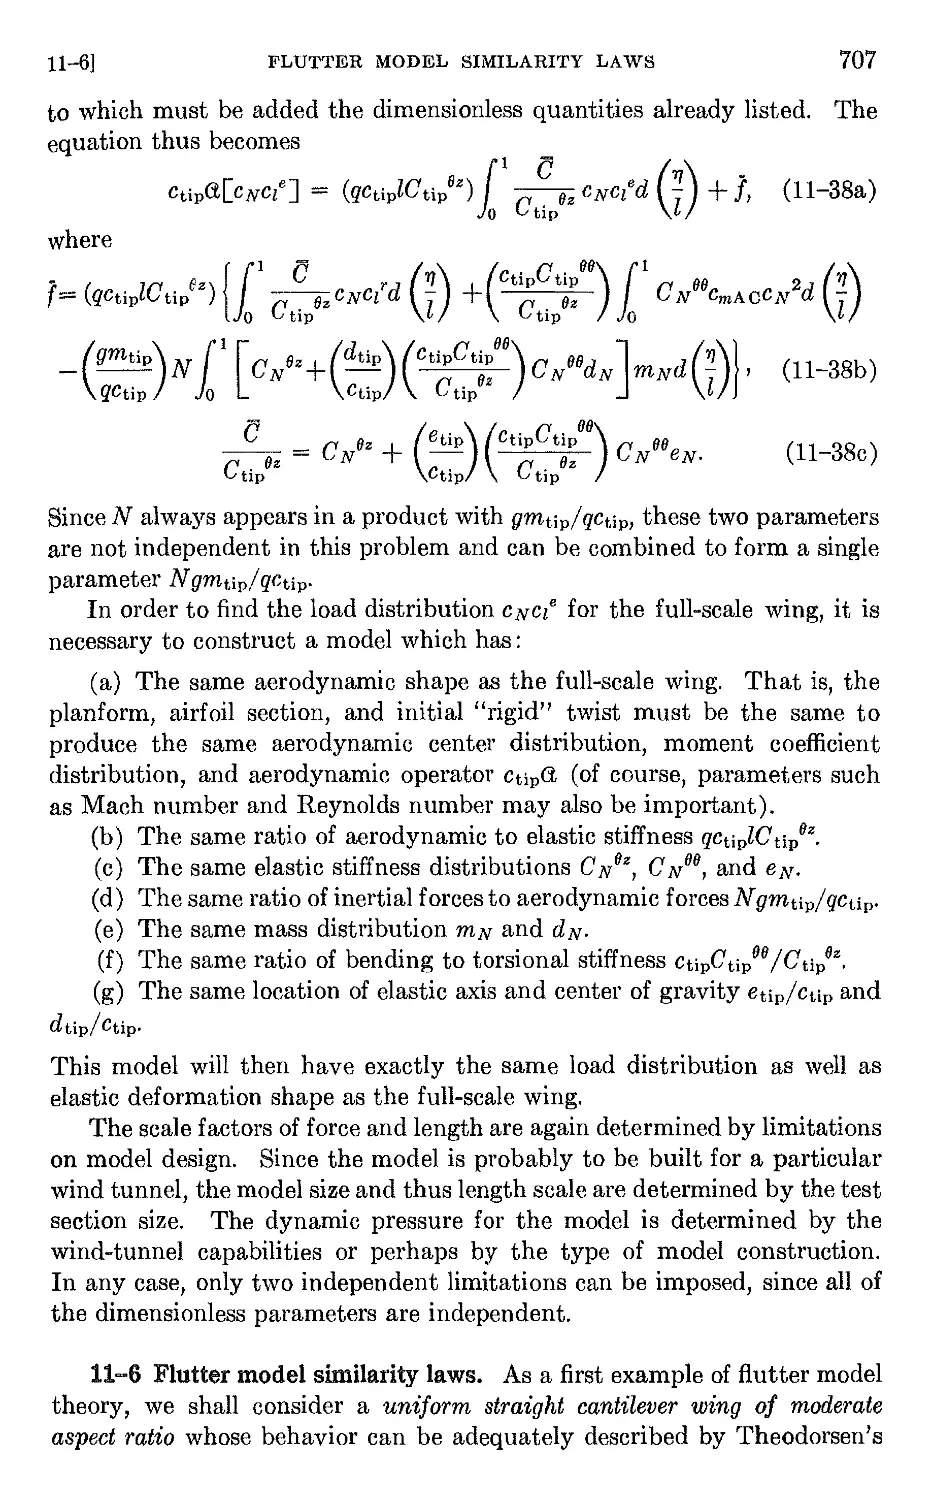 11.6 Flutter model similarity laws